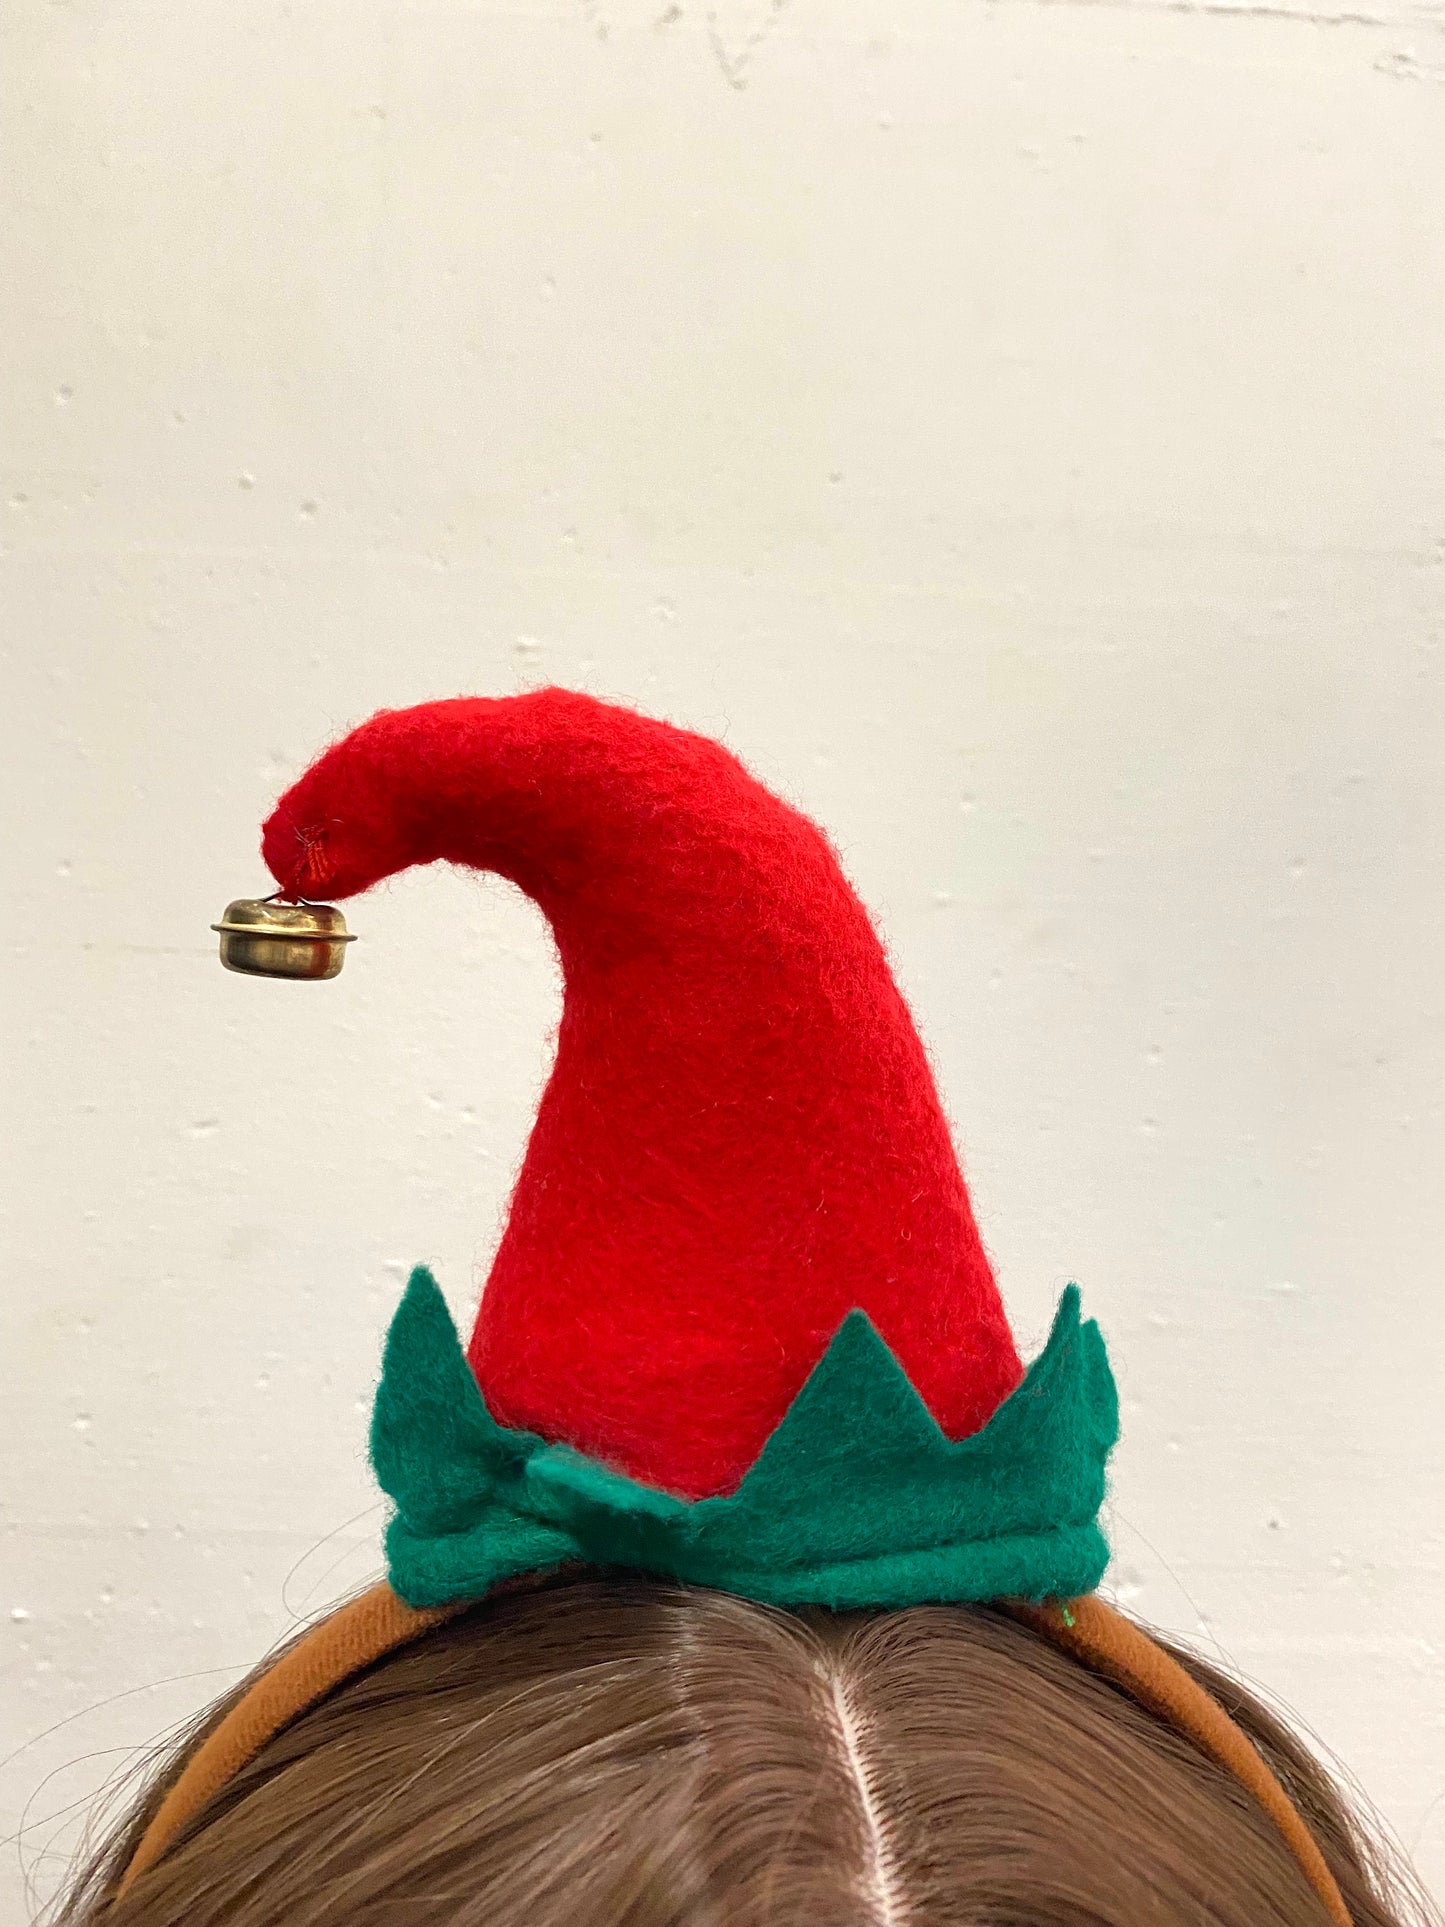 Christmas Elf Hat Headband